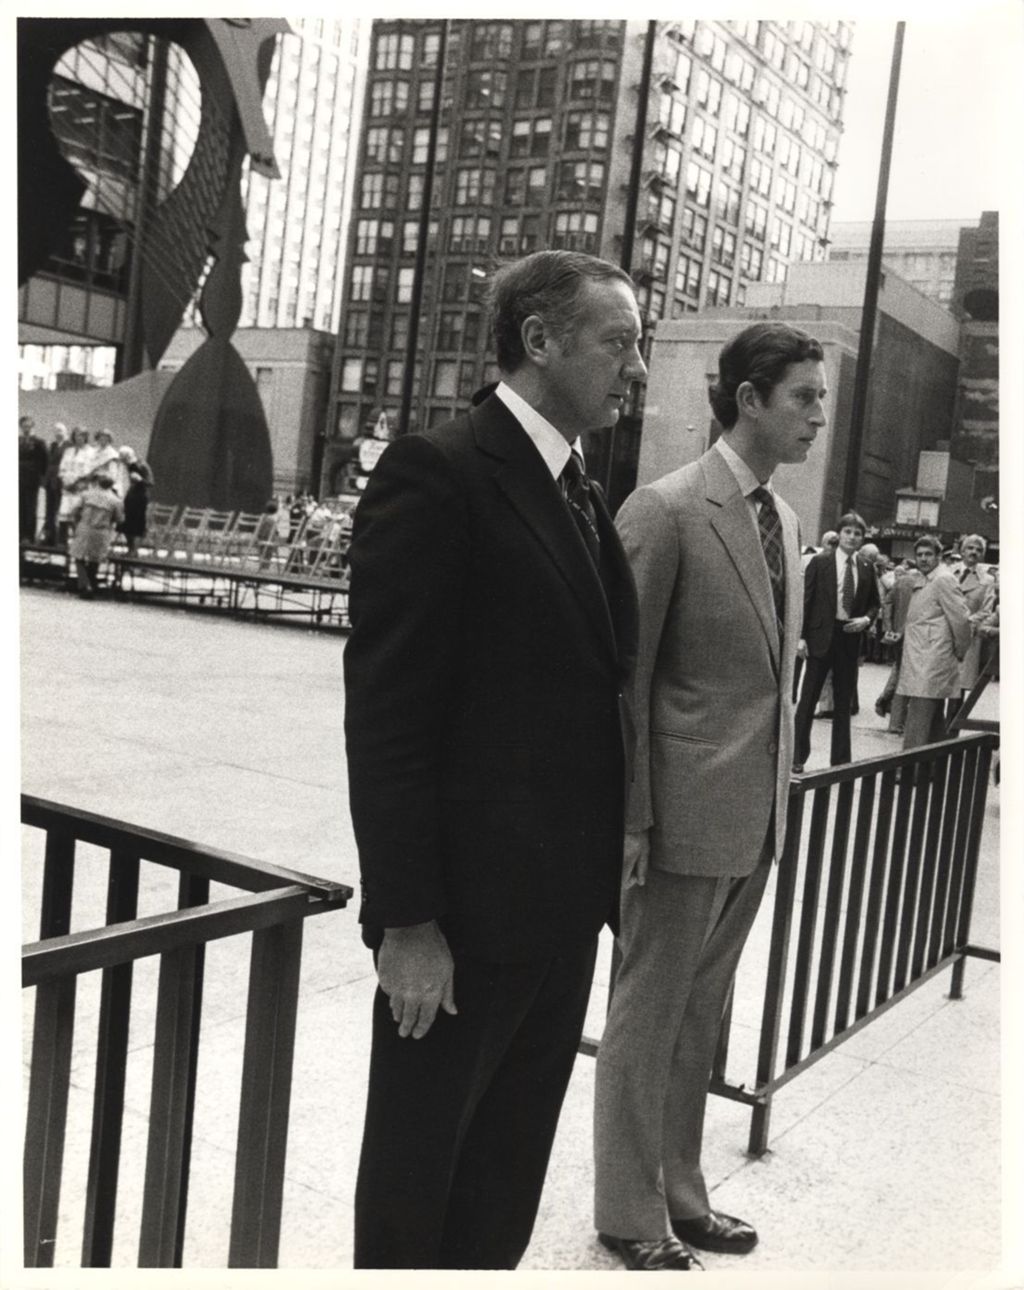 Miniature of Prince Charles and Mayor Michael Bilandic in Civic Center Plaza